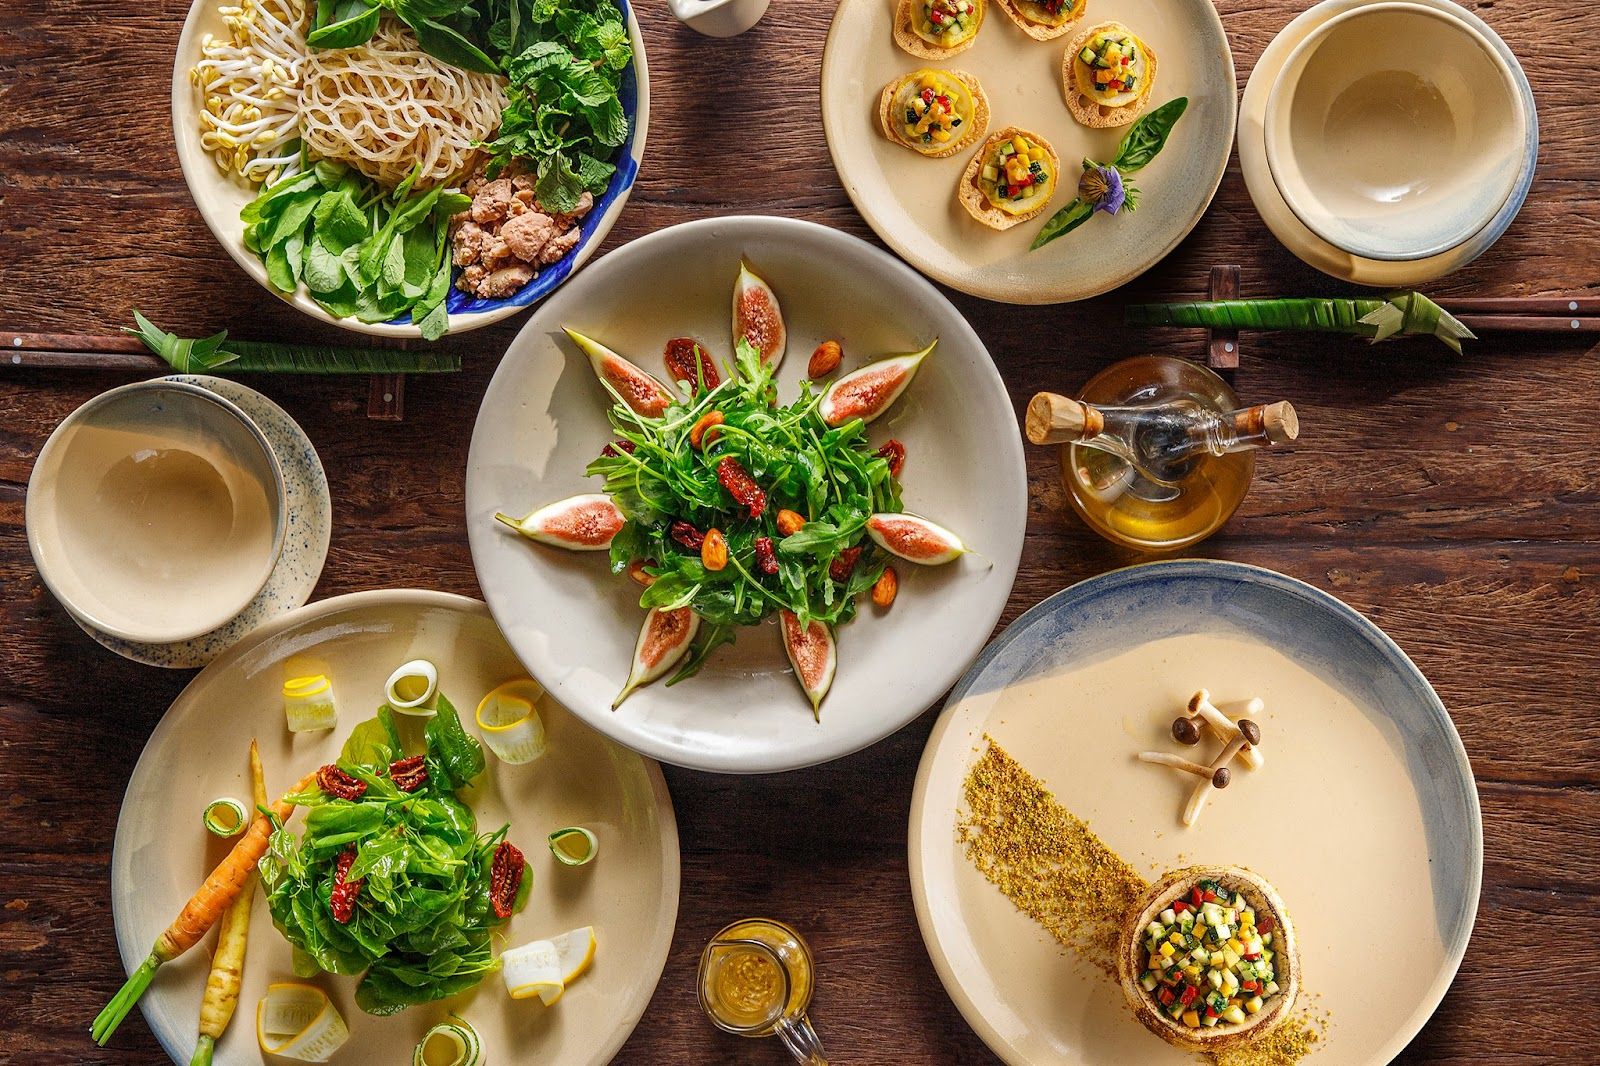 Most notable vegetarian restaurants in Saigon for a plant-based traveler